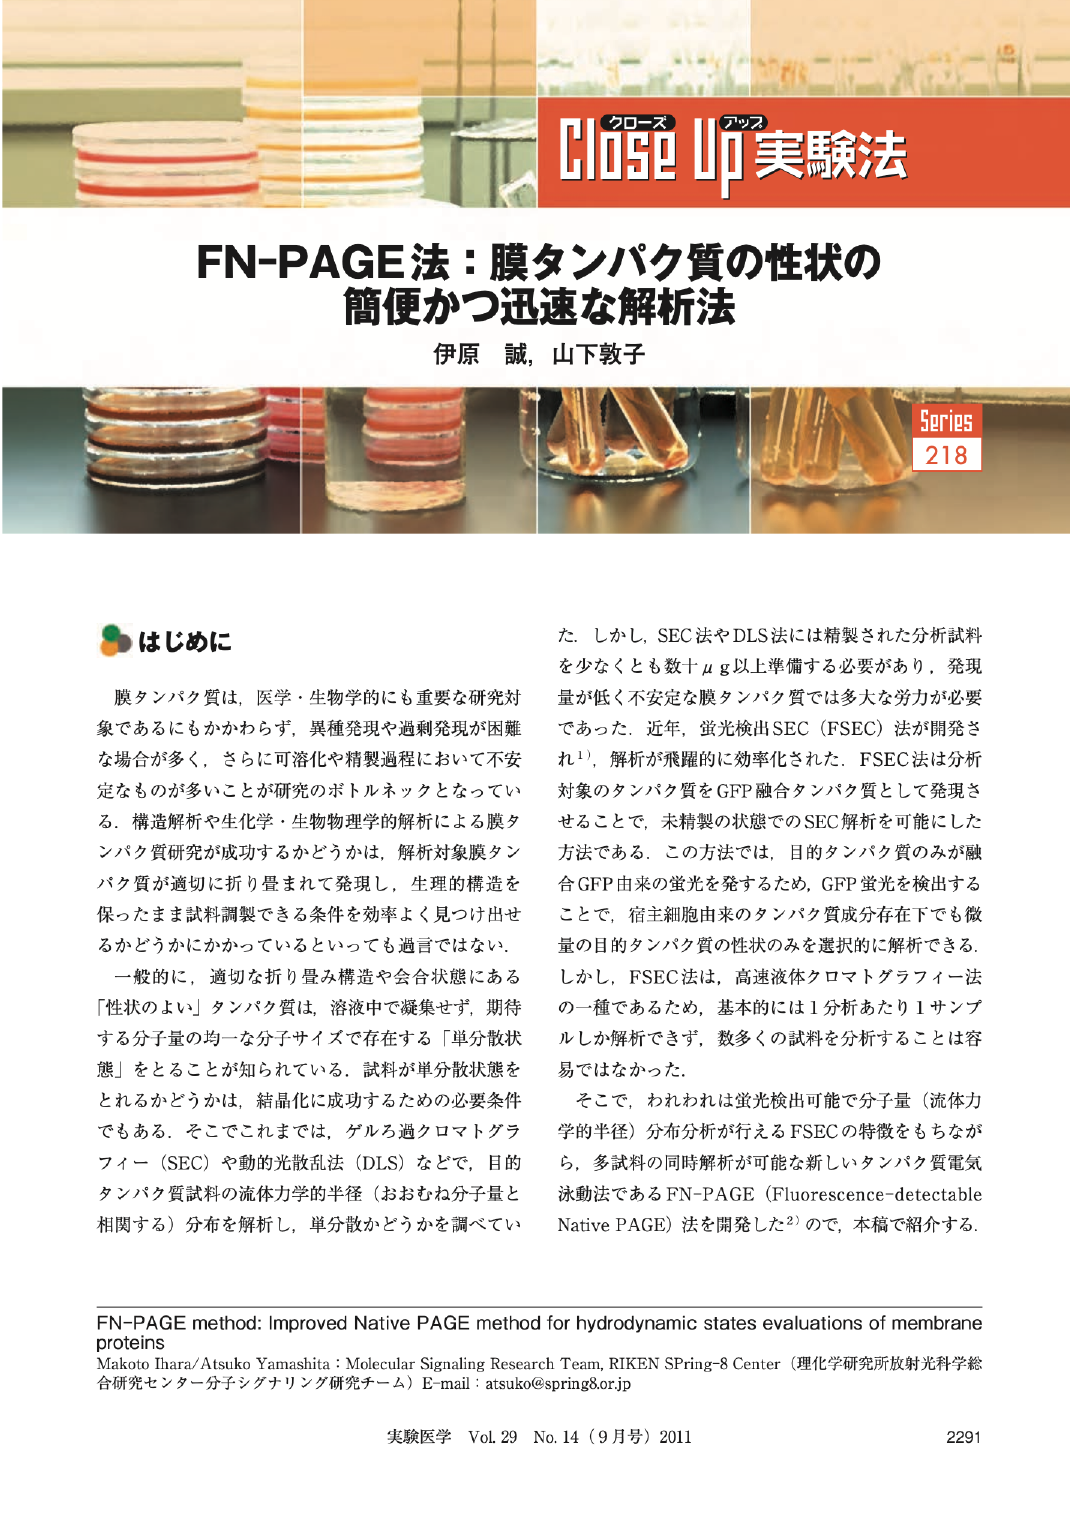 FN-PAGE法：膜タンパク質の性状の簡便かつ迅速な解析法